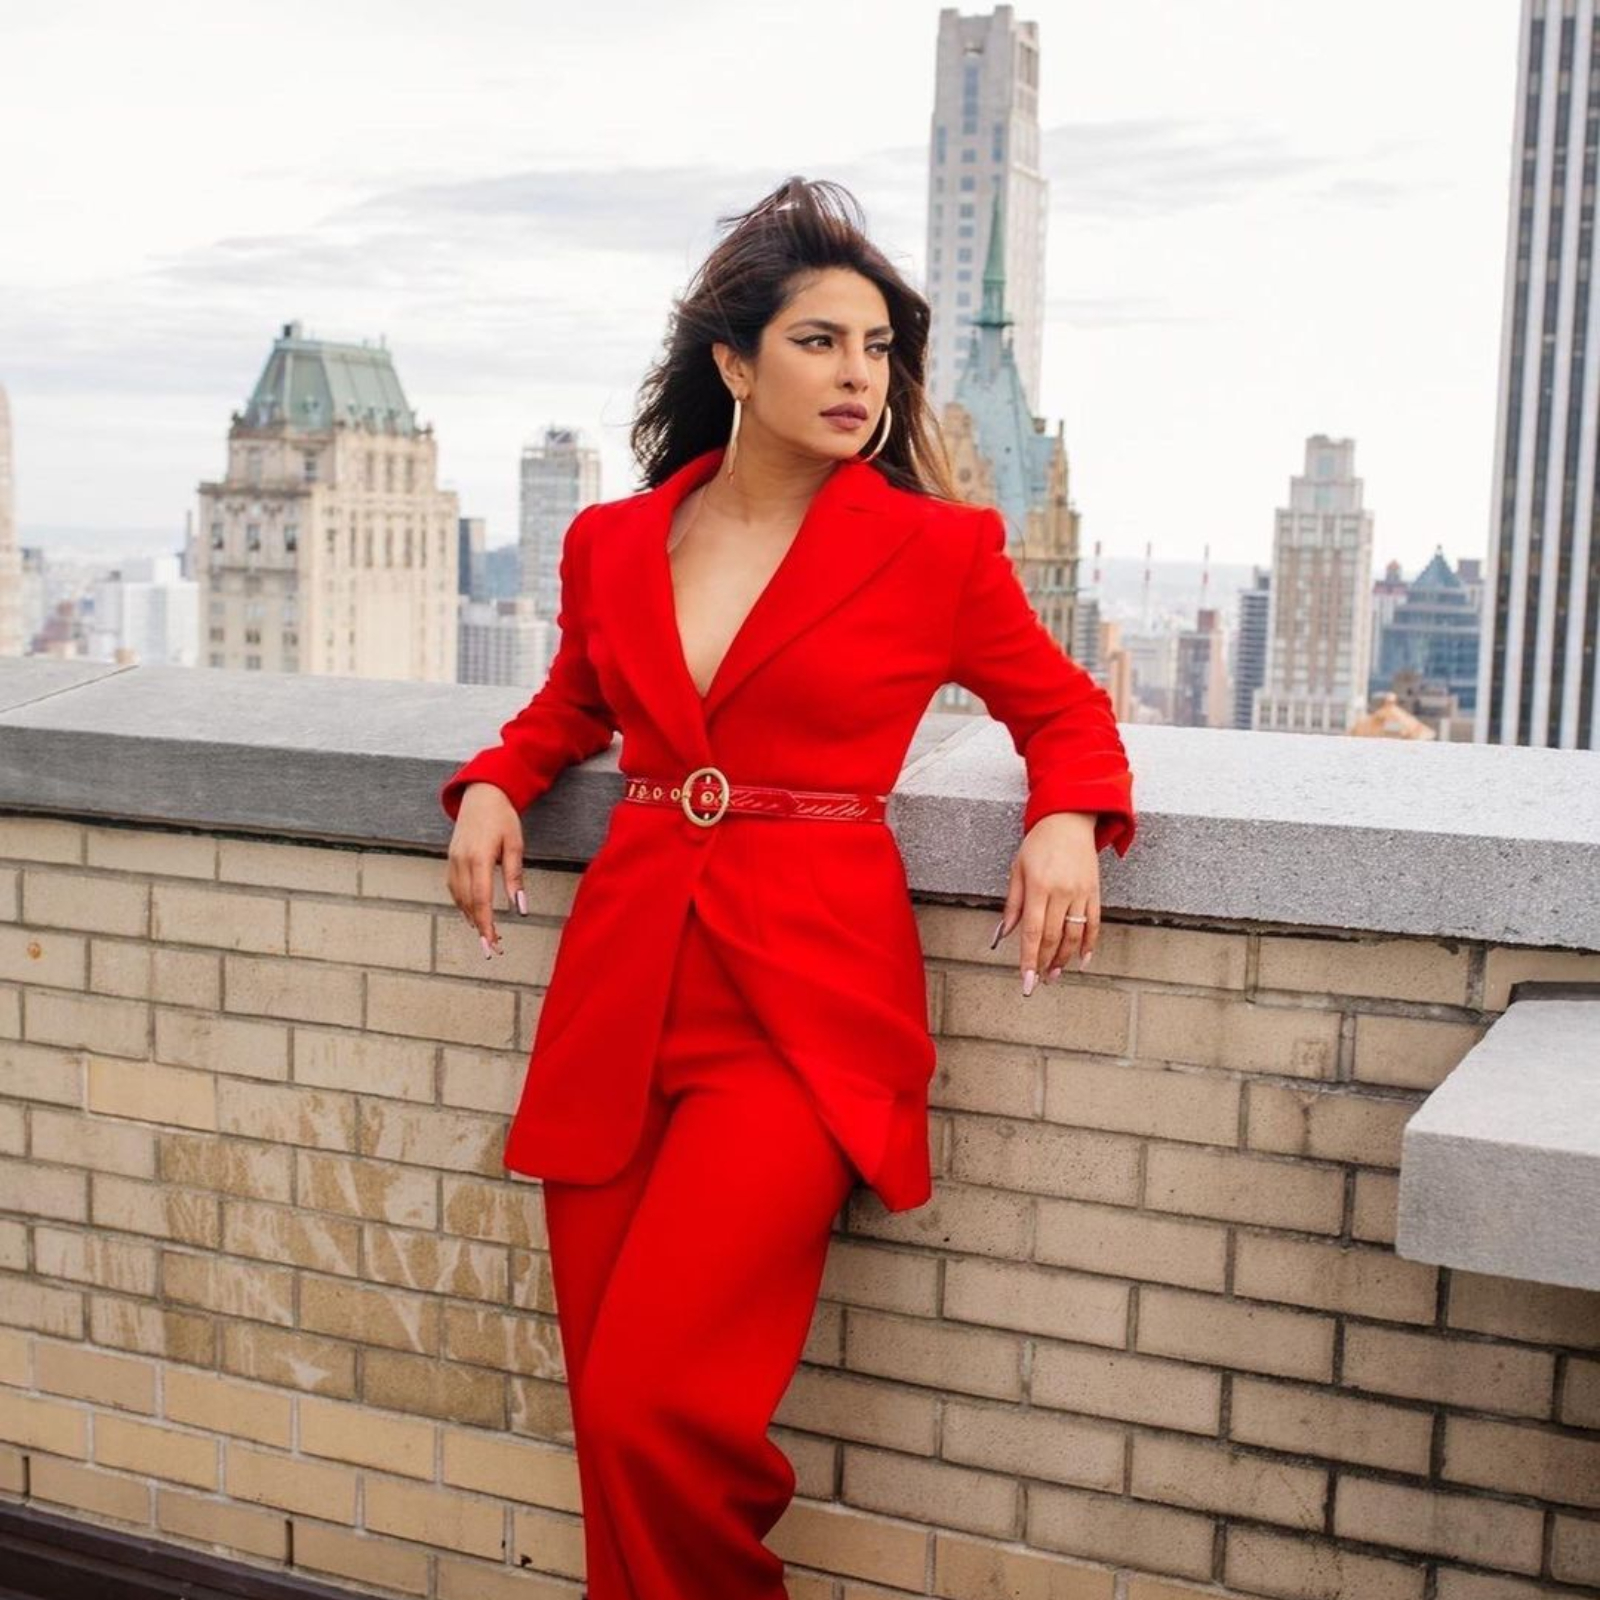 Priyanka Chopra looks uber chic in the smart red pantsuit.